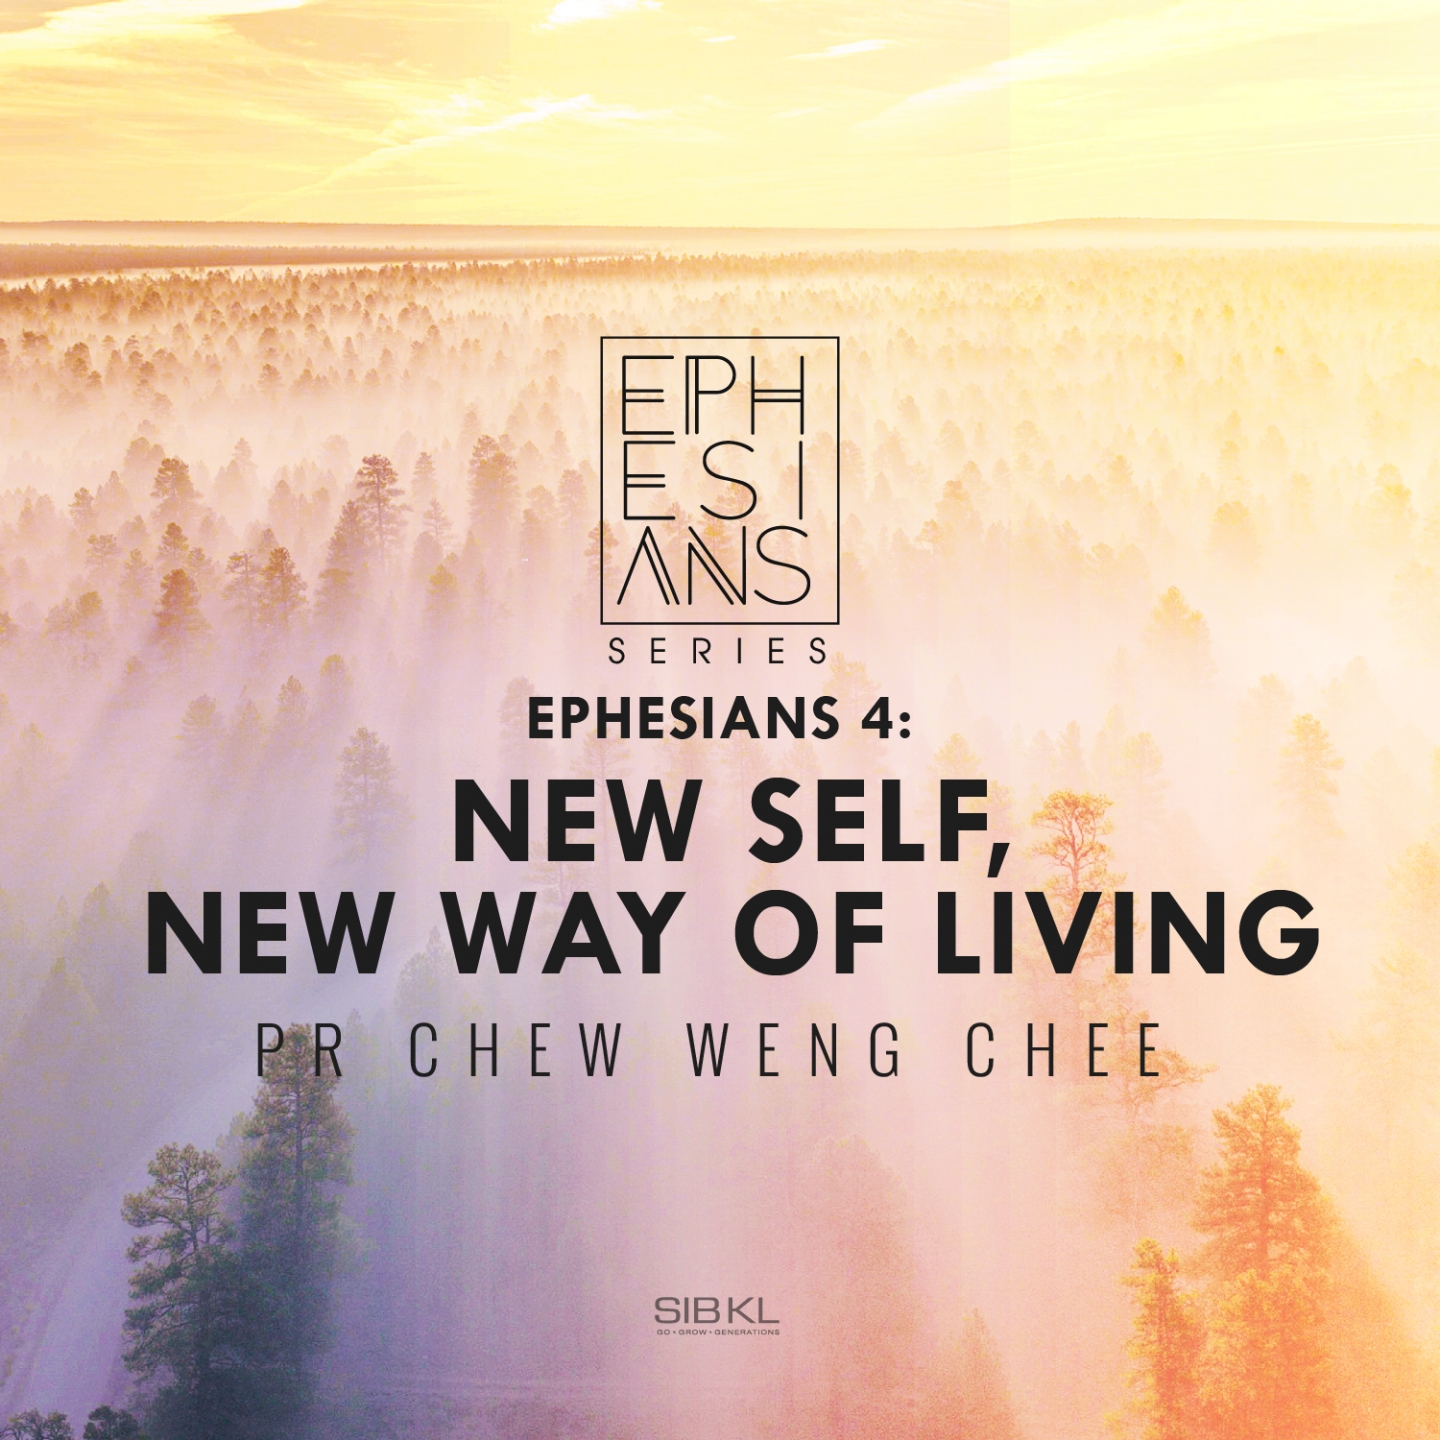 Ephesians 4: New Self, New Way of Living